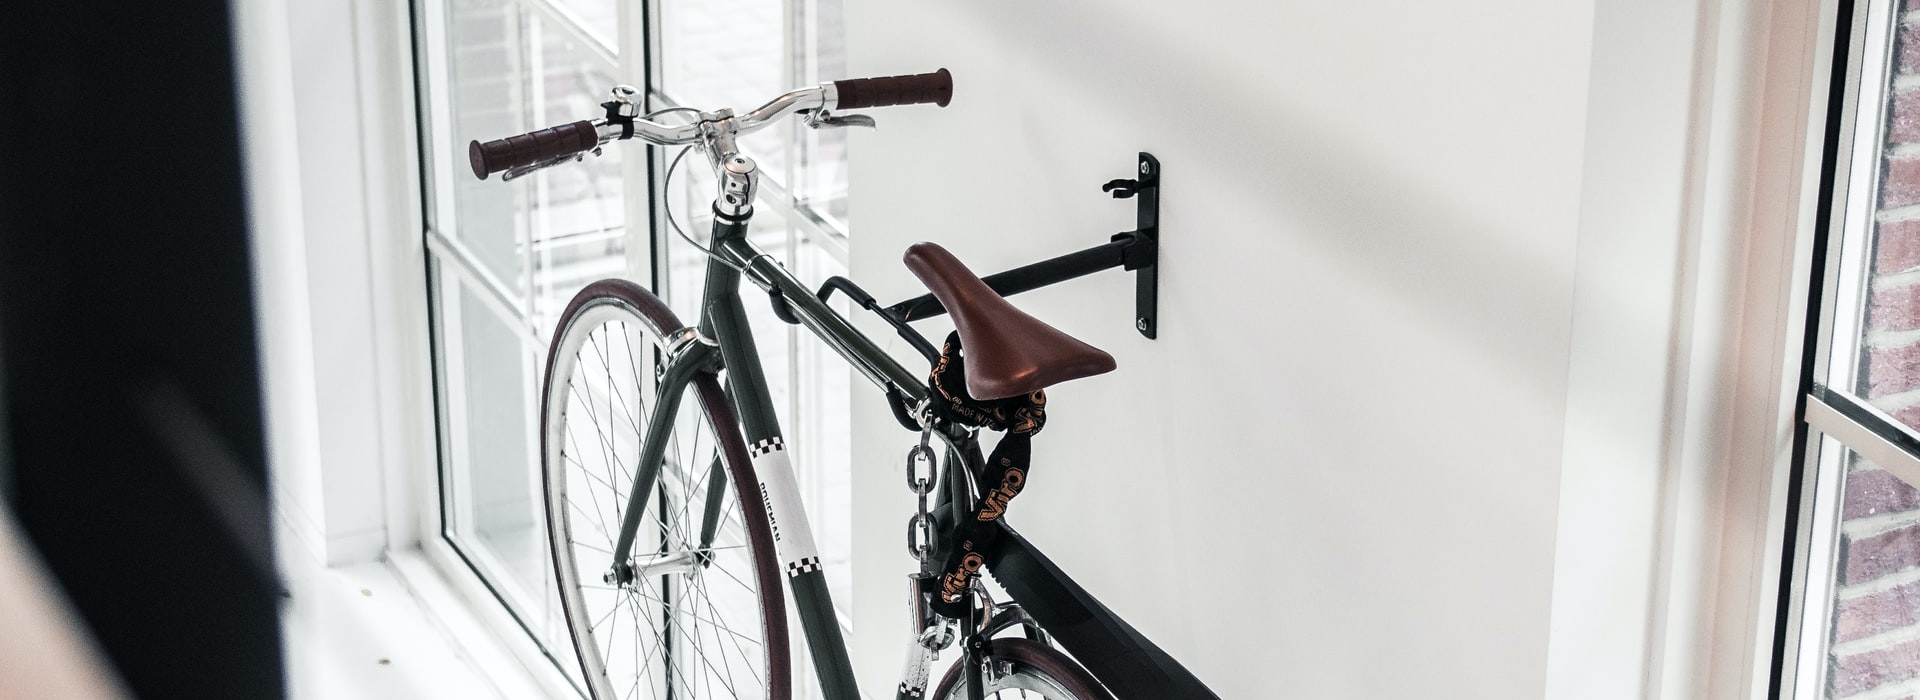 Colgar bicicletas en la pared- api.cat  Bike storage apartment, Bicycle  storage, Bike storage